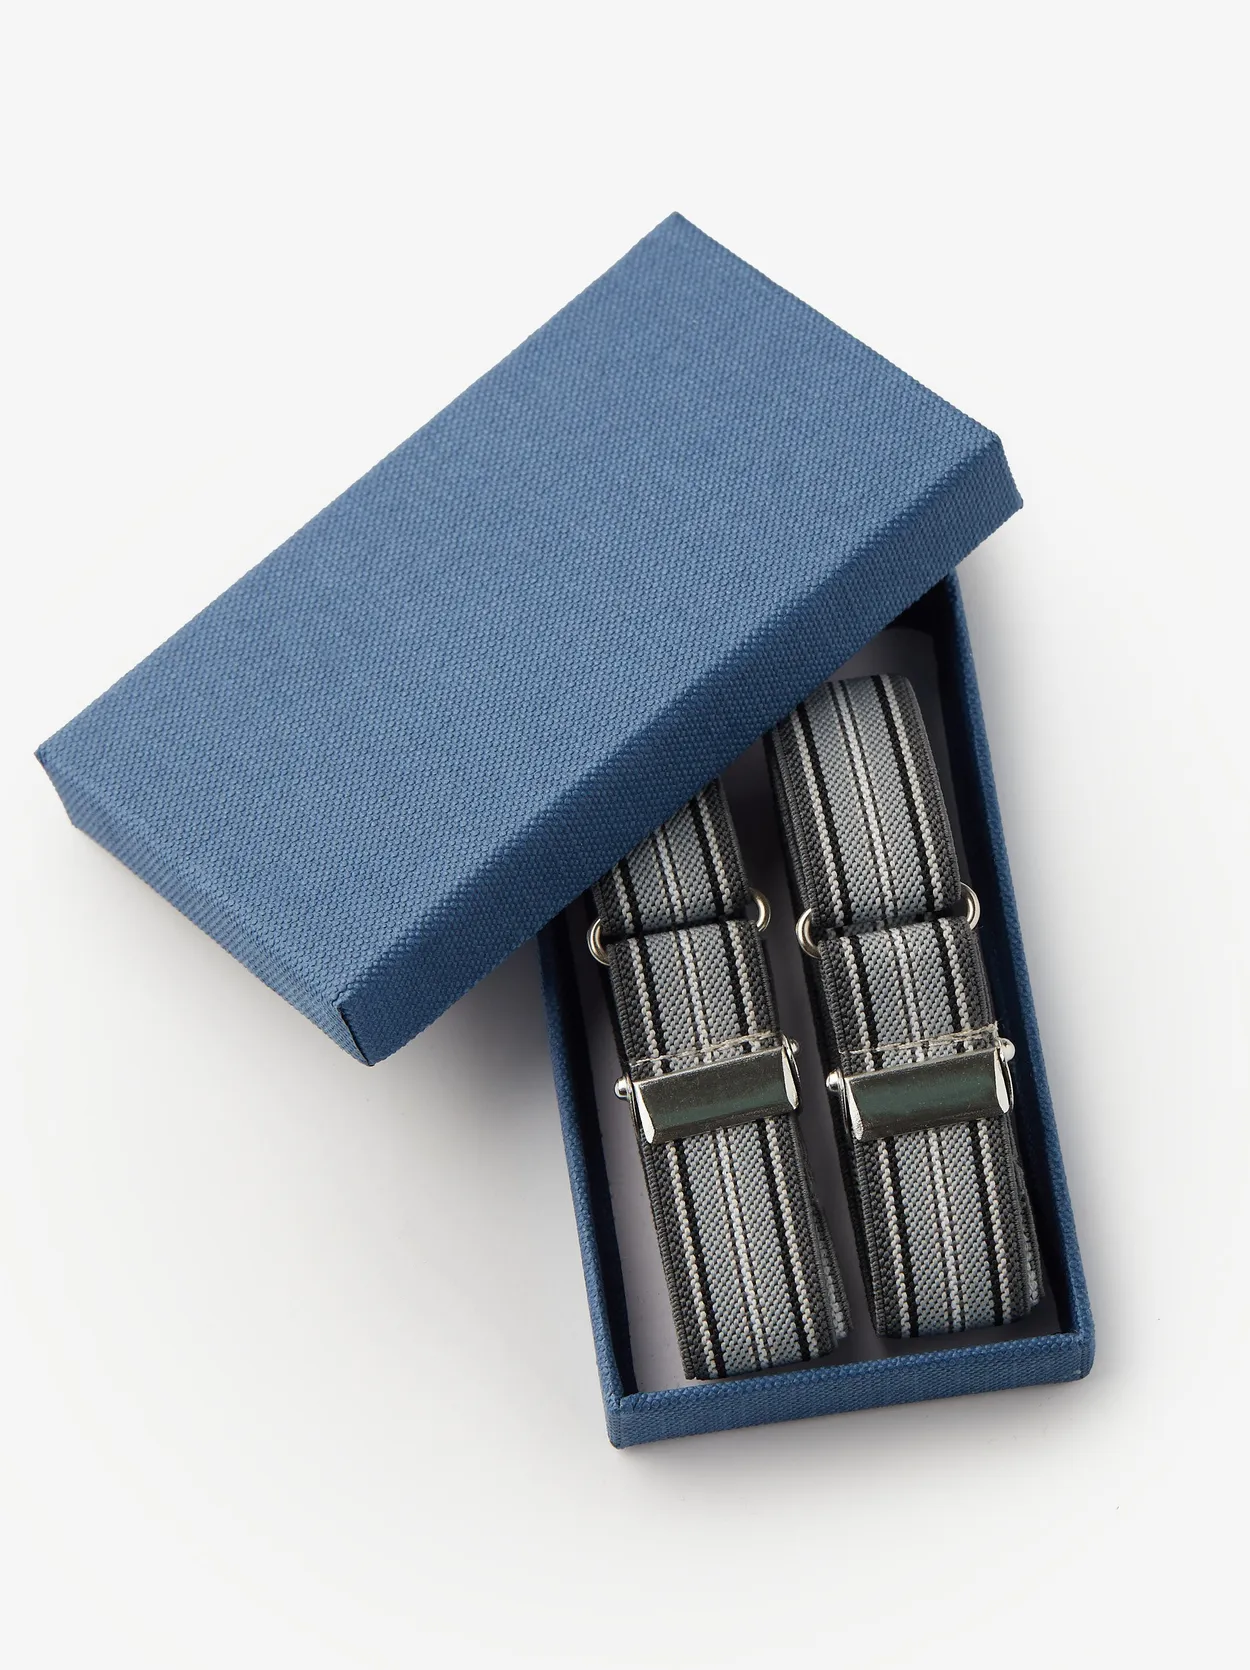 Grey & Blue Sleeve Garters Textile